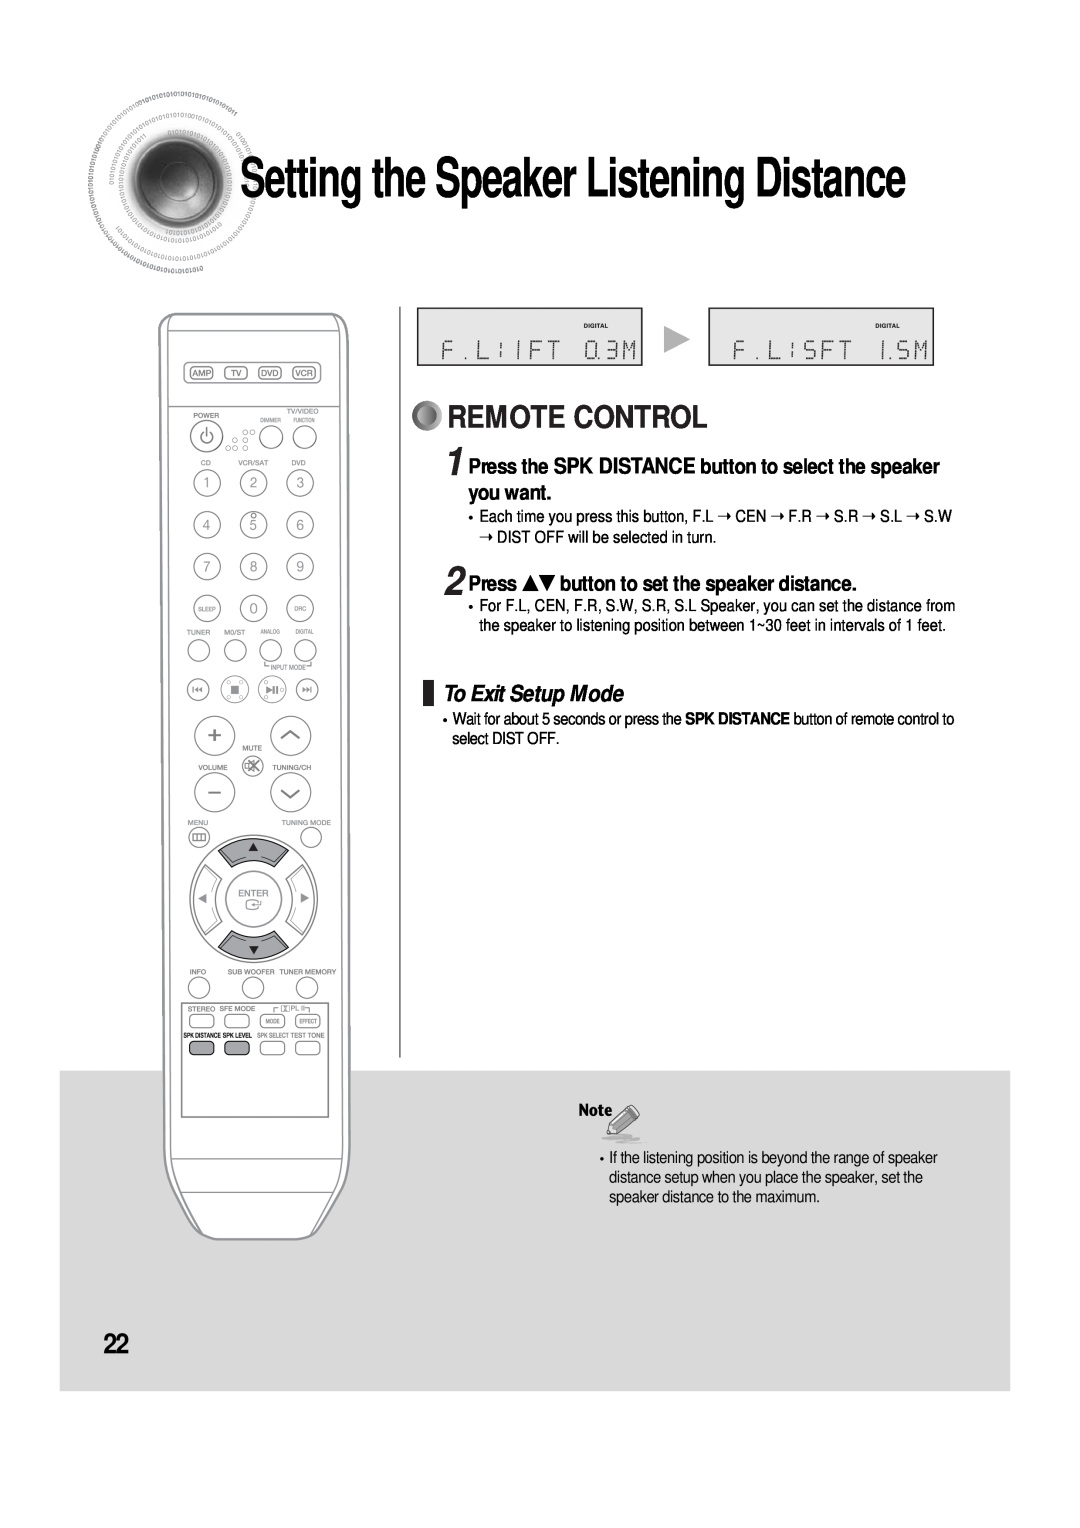 Samsung AV-R610, 20060510083254531, AH68-01853S Settingthe Speaker Listening Distance, Remote Control, To Exit Setup Mode 